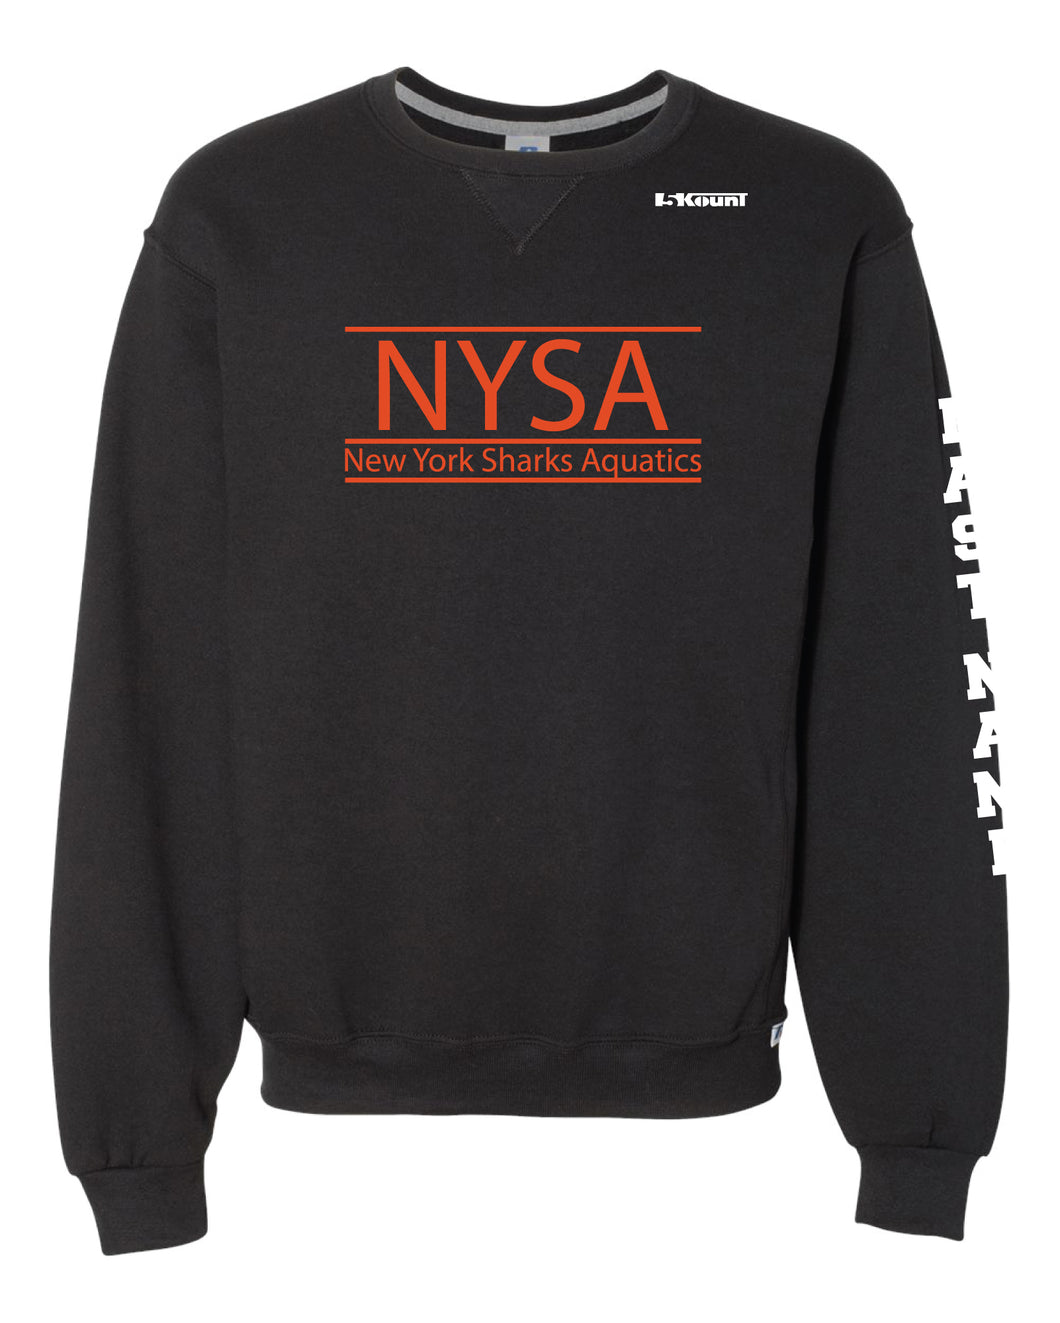 NYSA Russell Athletic Cotton Crewneck Sweatshirt - Black - 5KounT2018